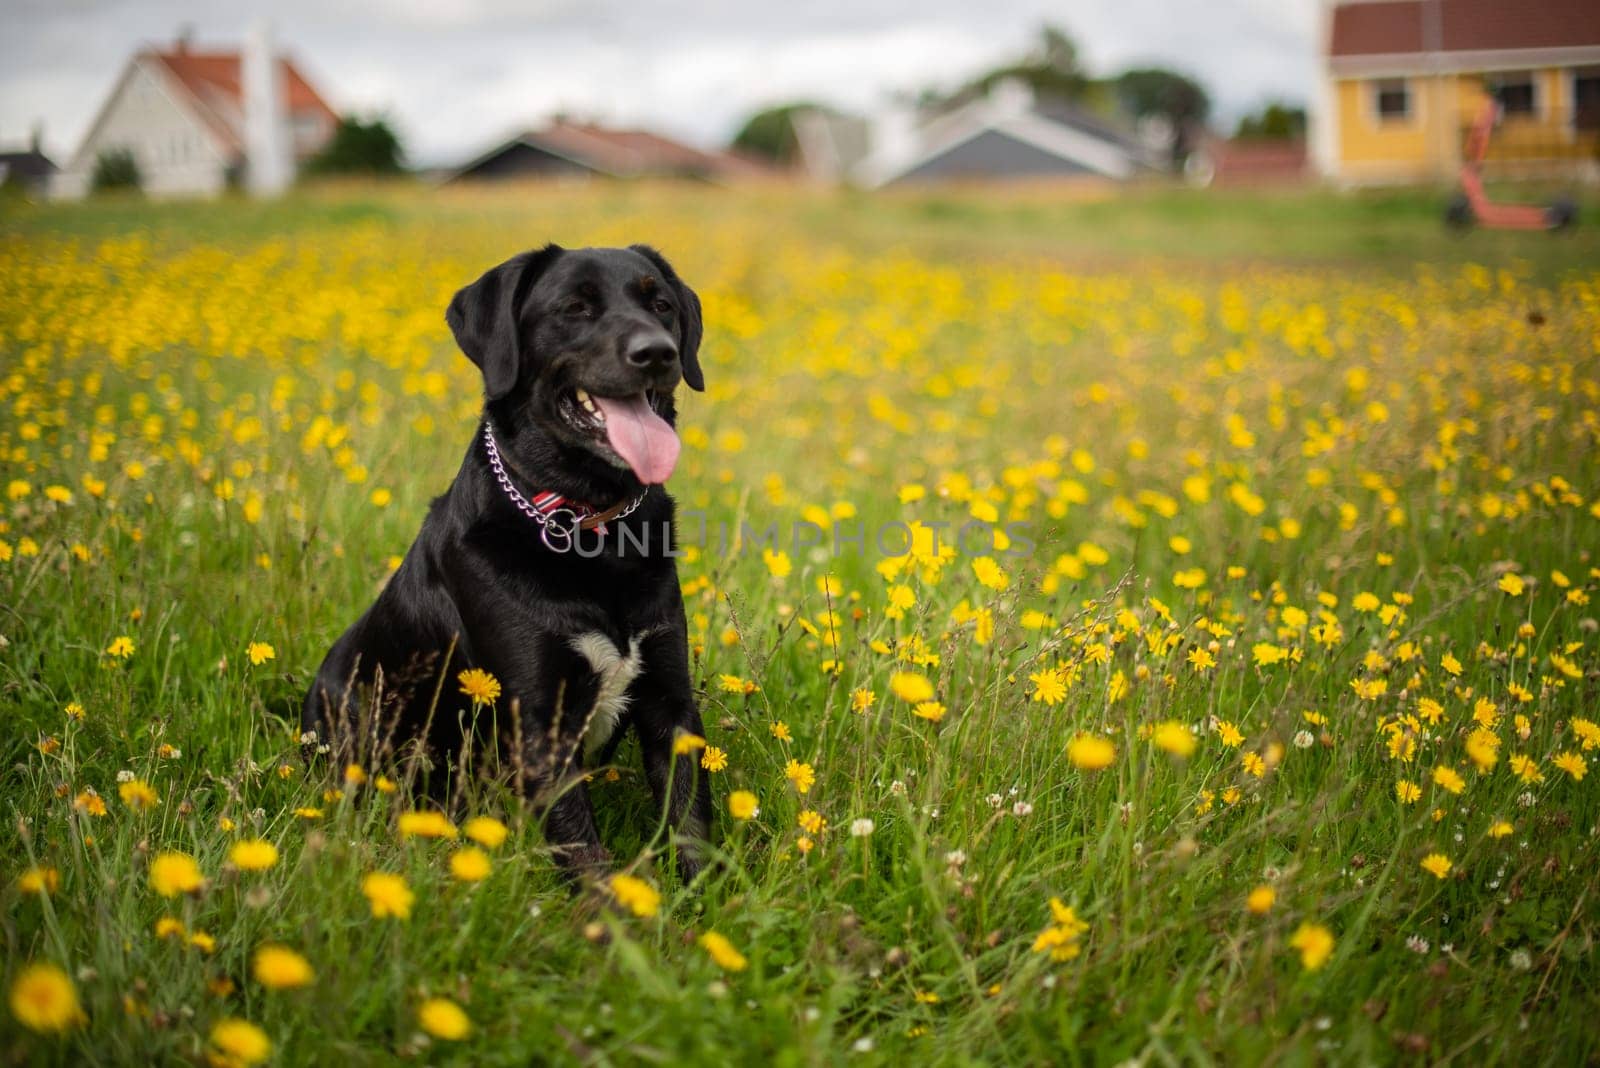 Black Labrador Sitting in a Field of Yellow Flowers by JavierdelCanto